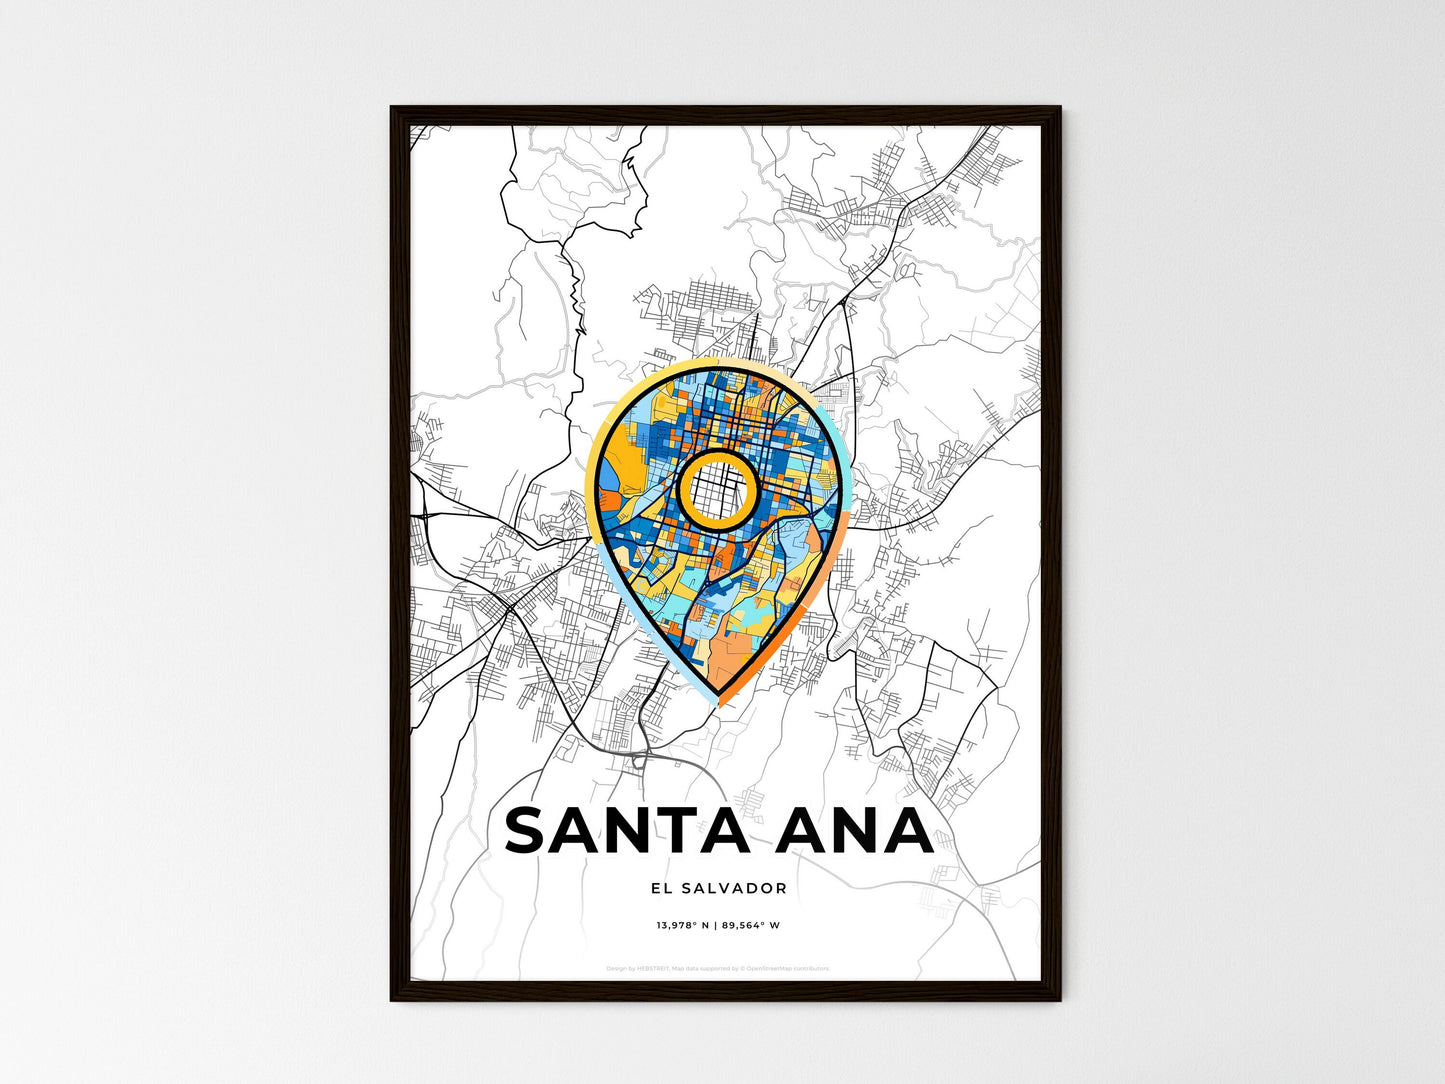 SANTA ANA EL SALVADOR minimal art map with a colorful icon. Style 1